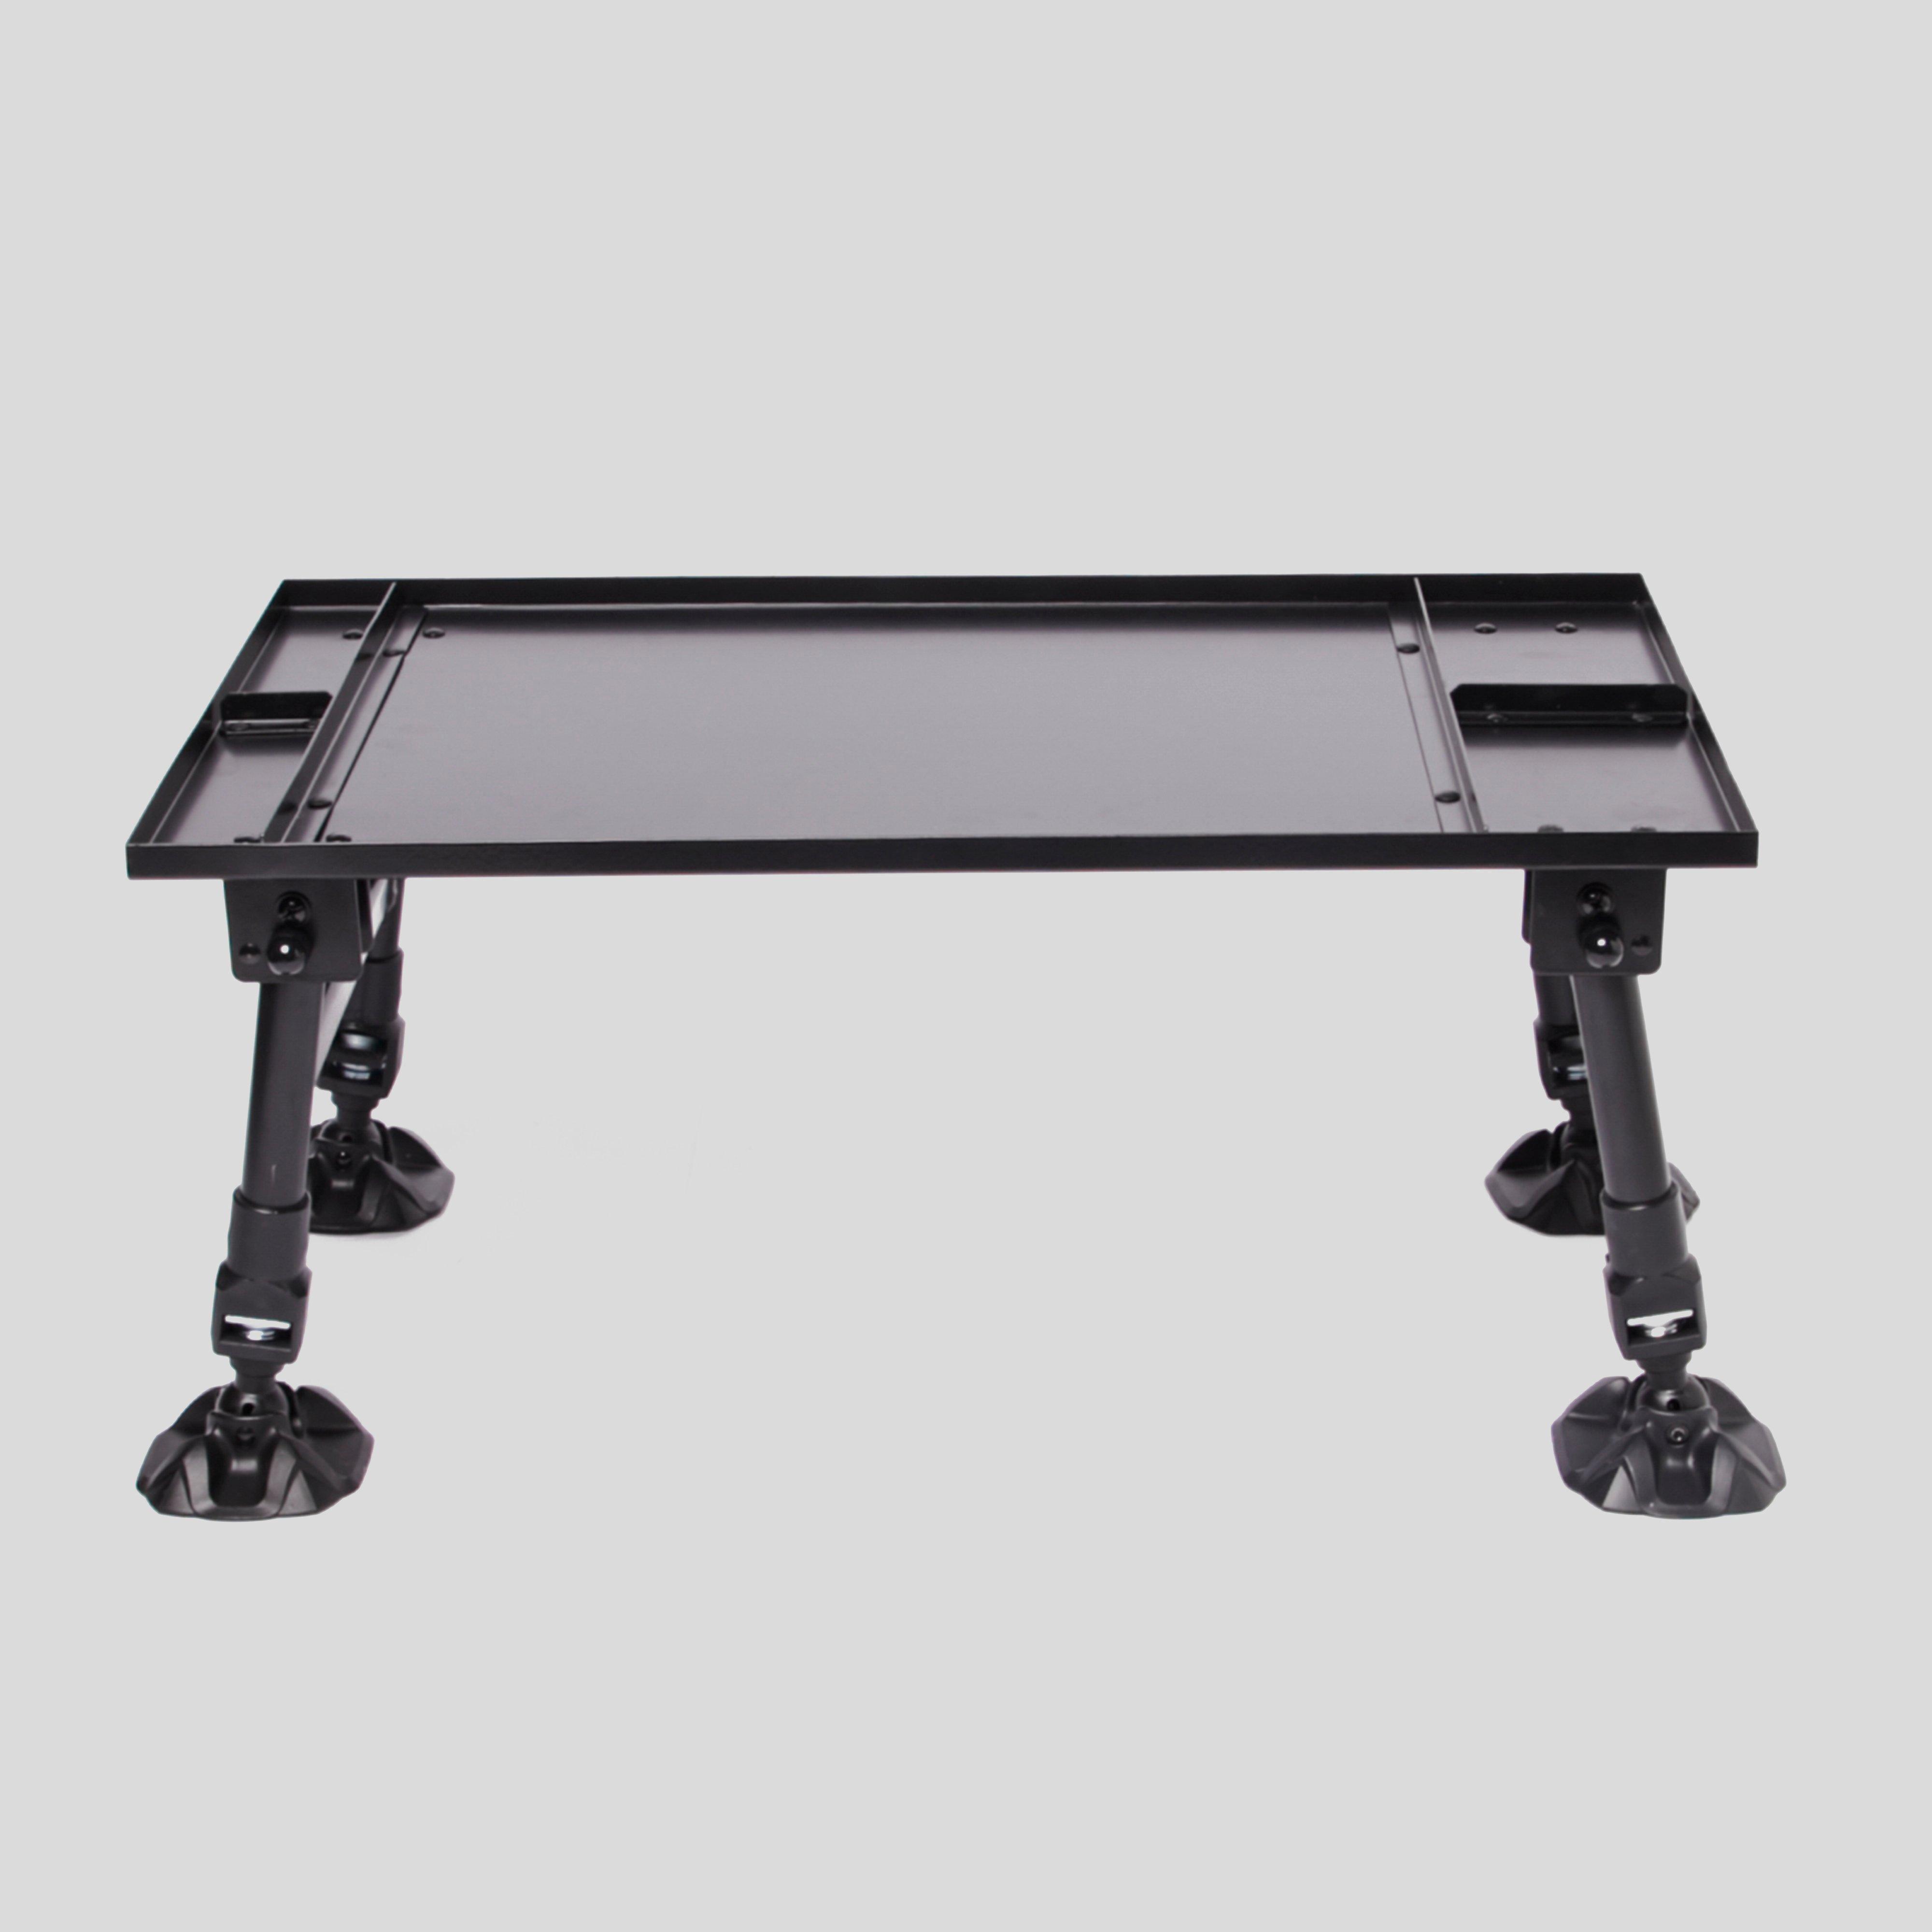  NGT Giant Adjustable Bivvy Table, Black